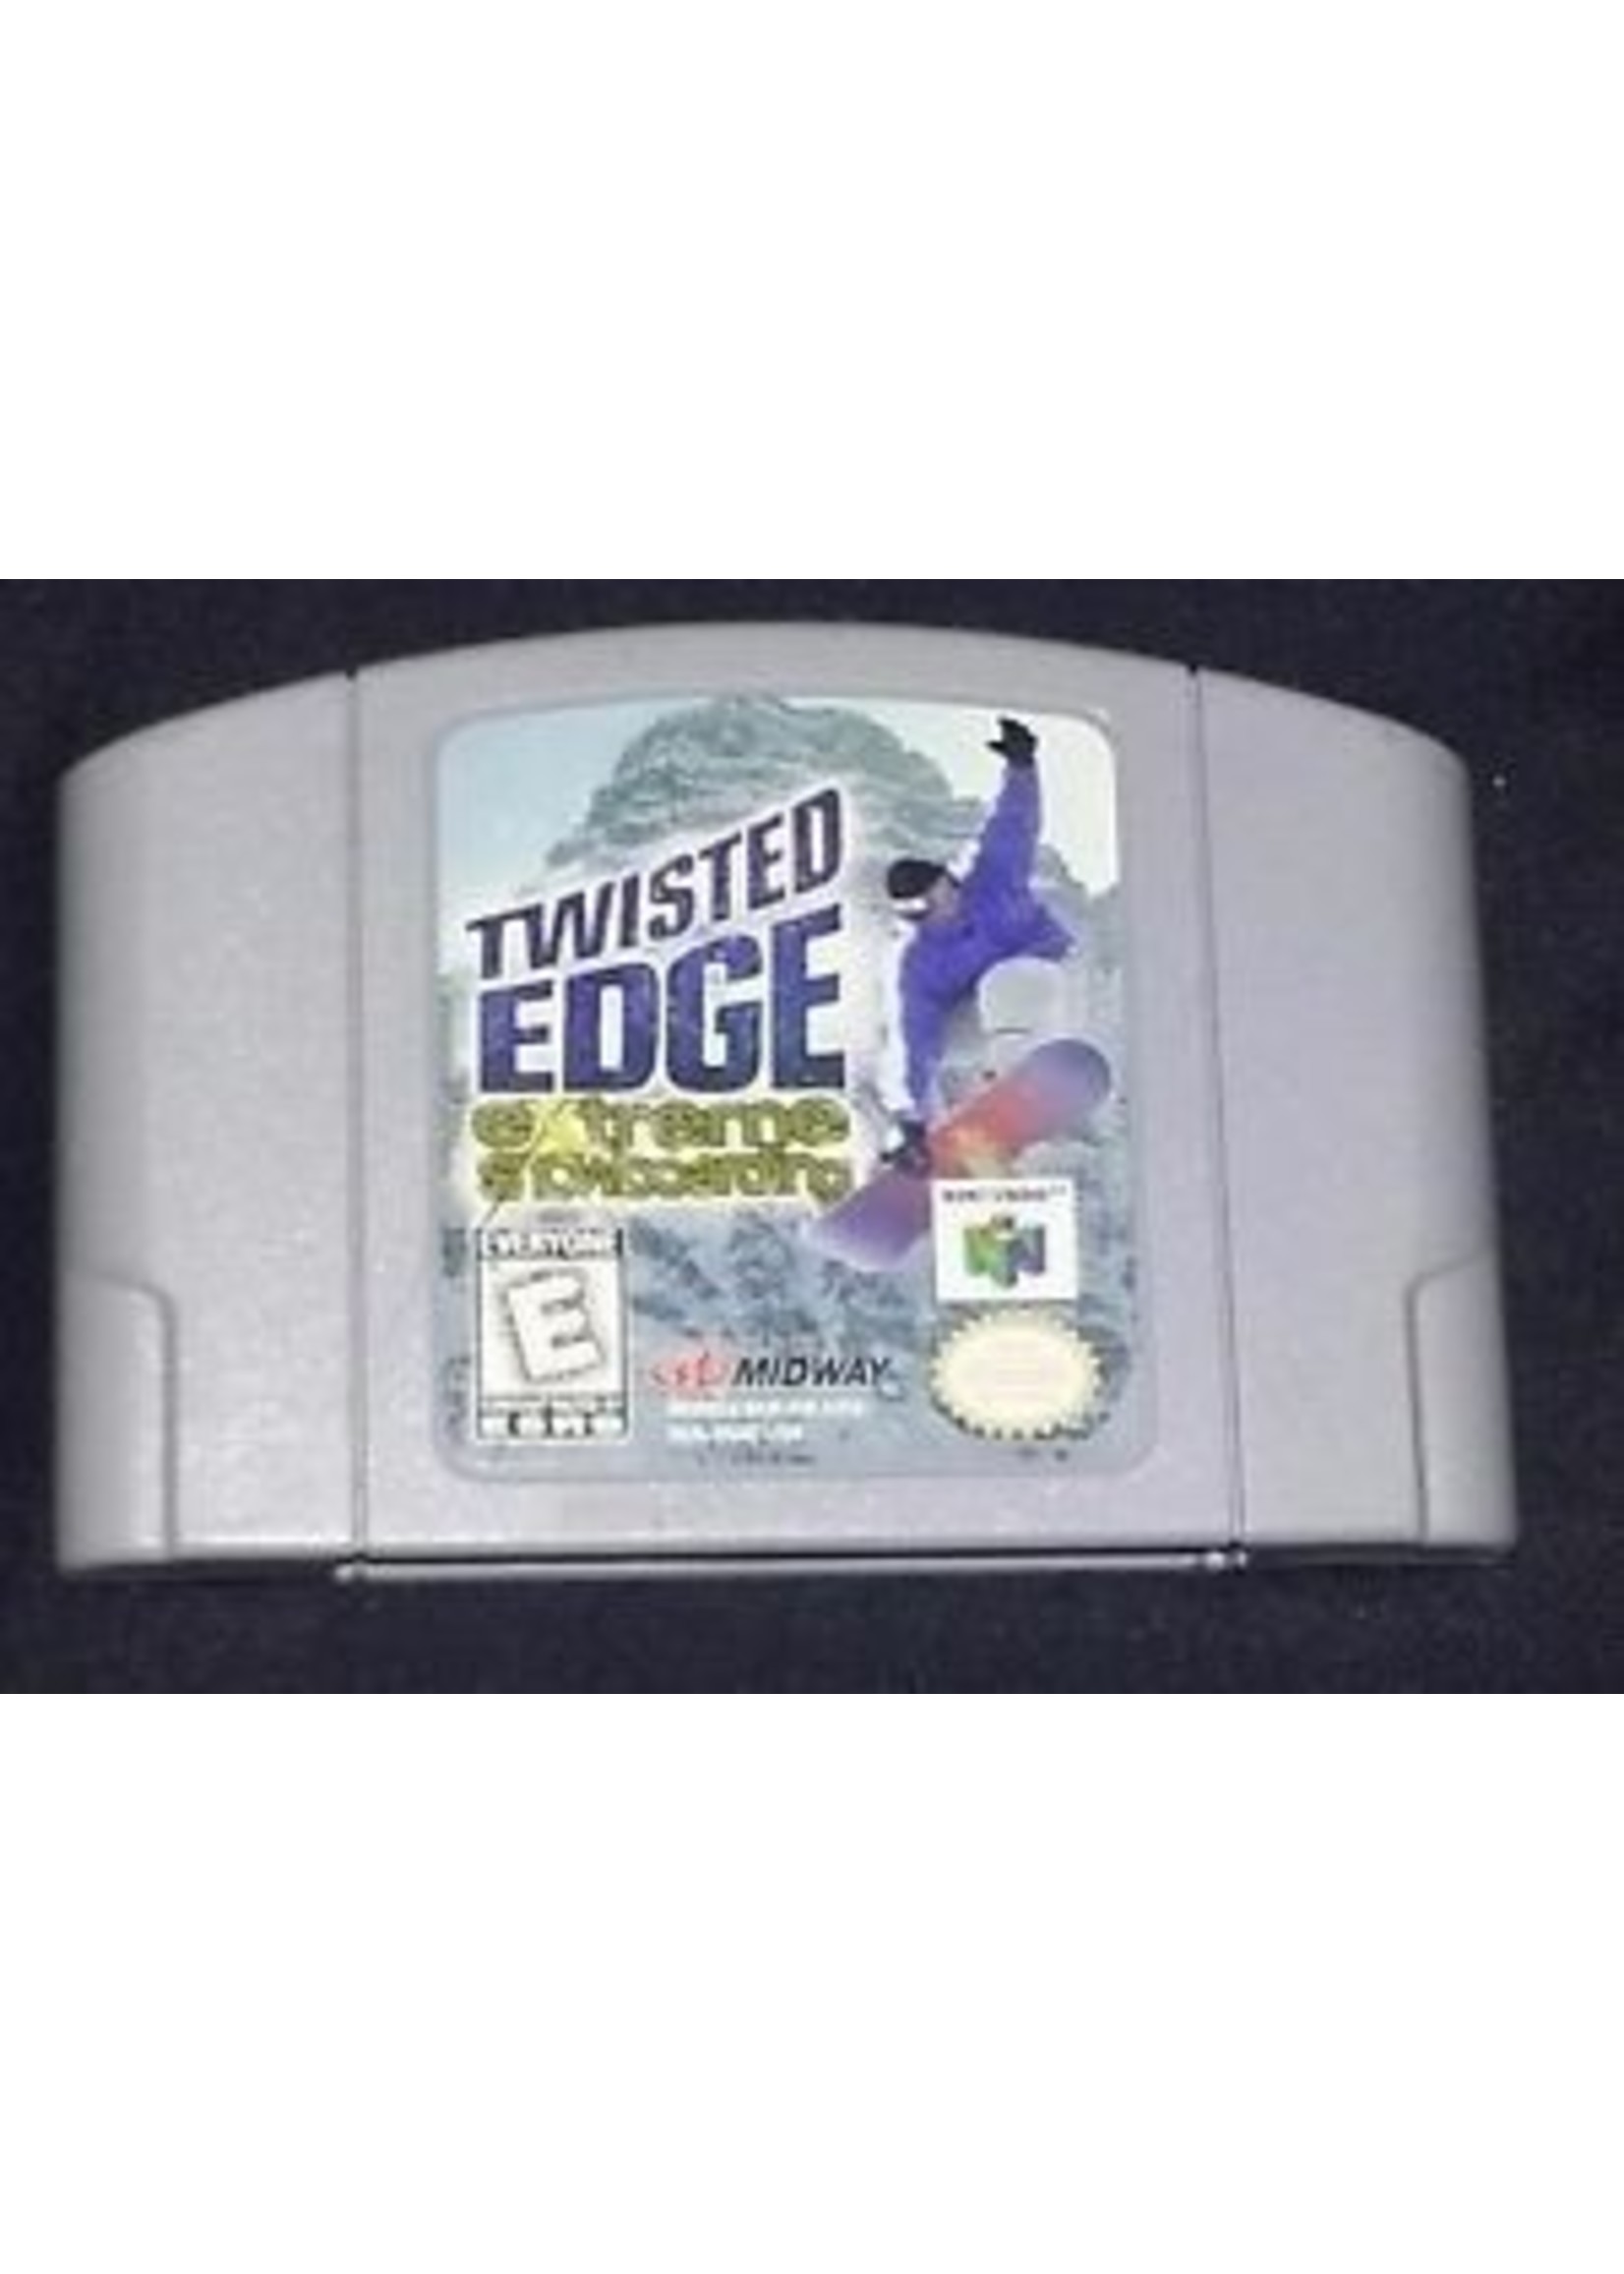 Nintendo 64 (N64) Twisted Edge Extreme Snowboarding